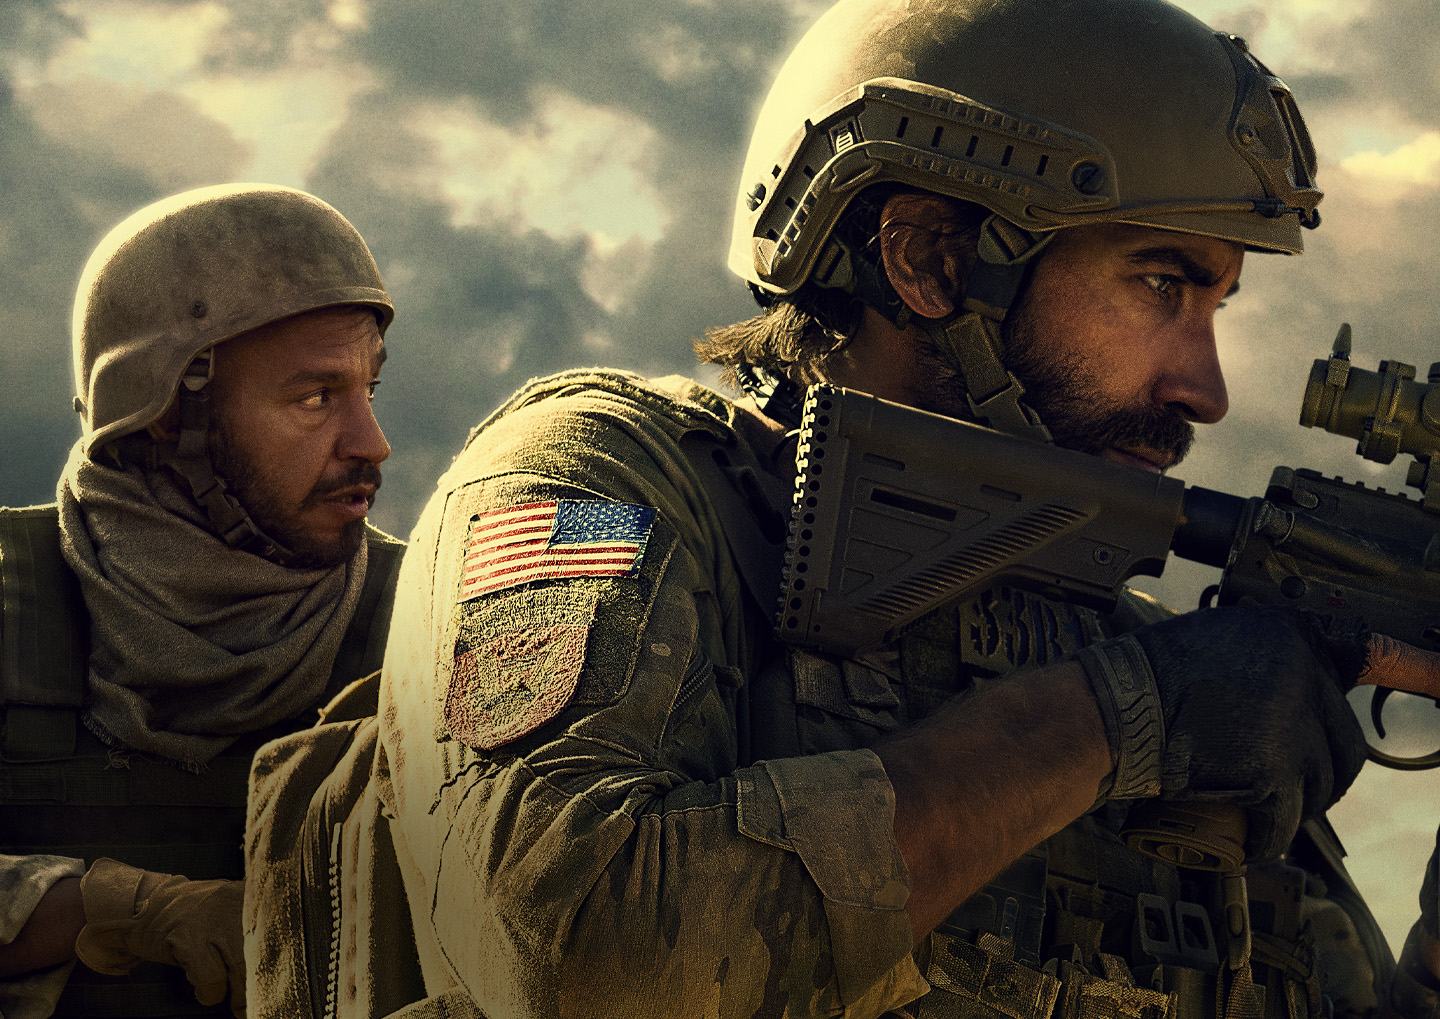 Jake Gyllenhaal enfrenta talibãs em trailer de filme de guerra